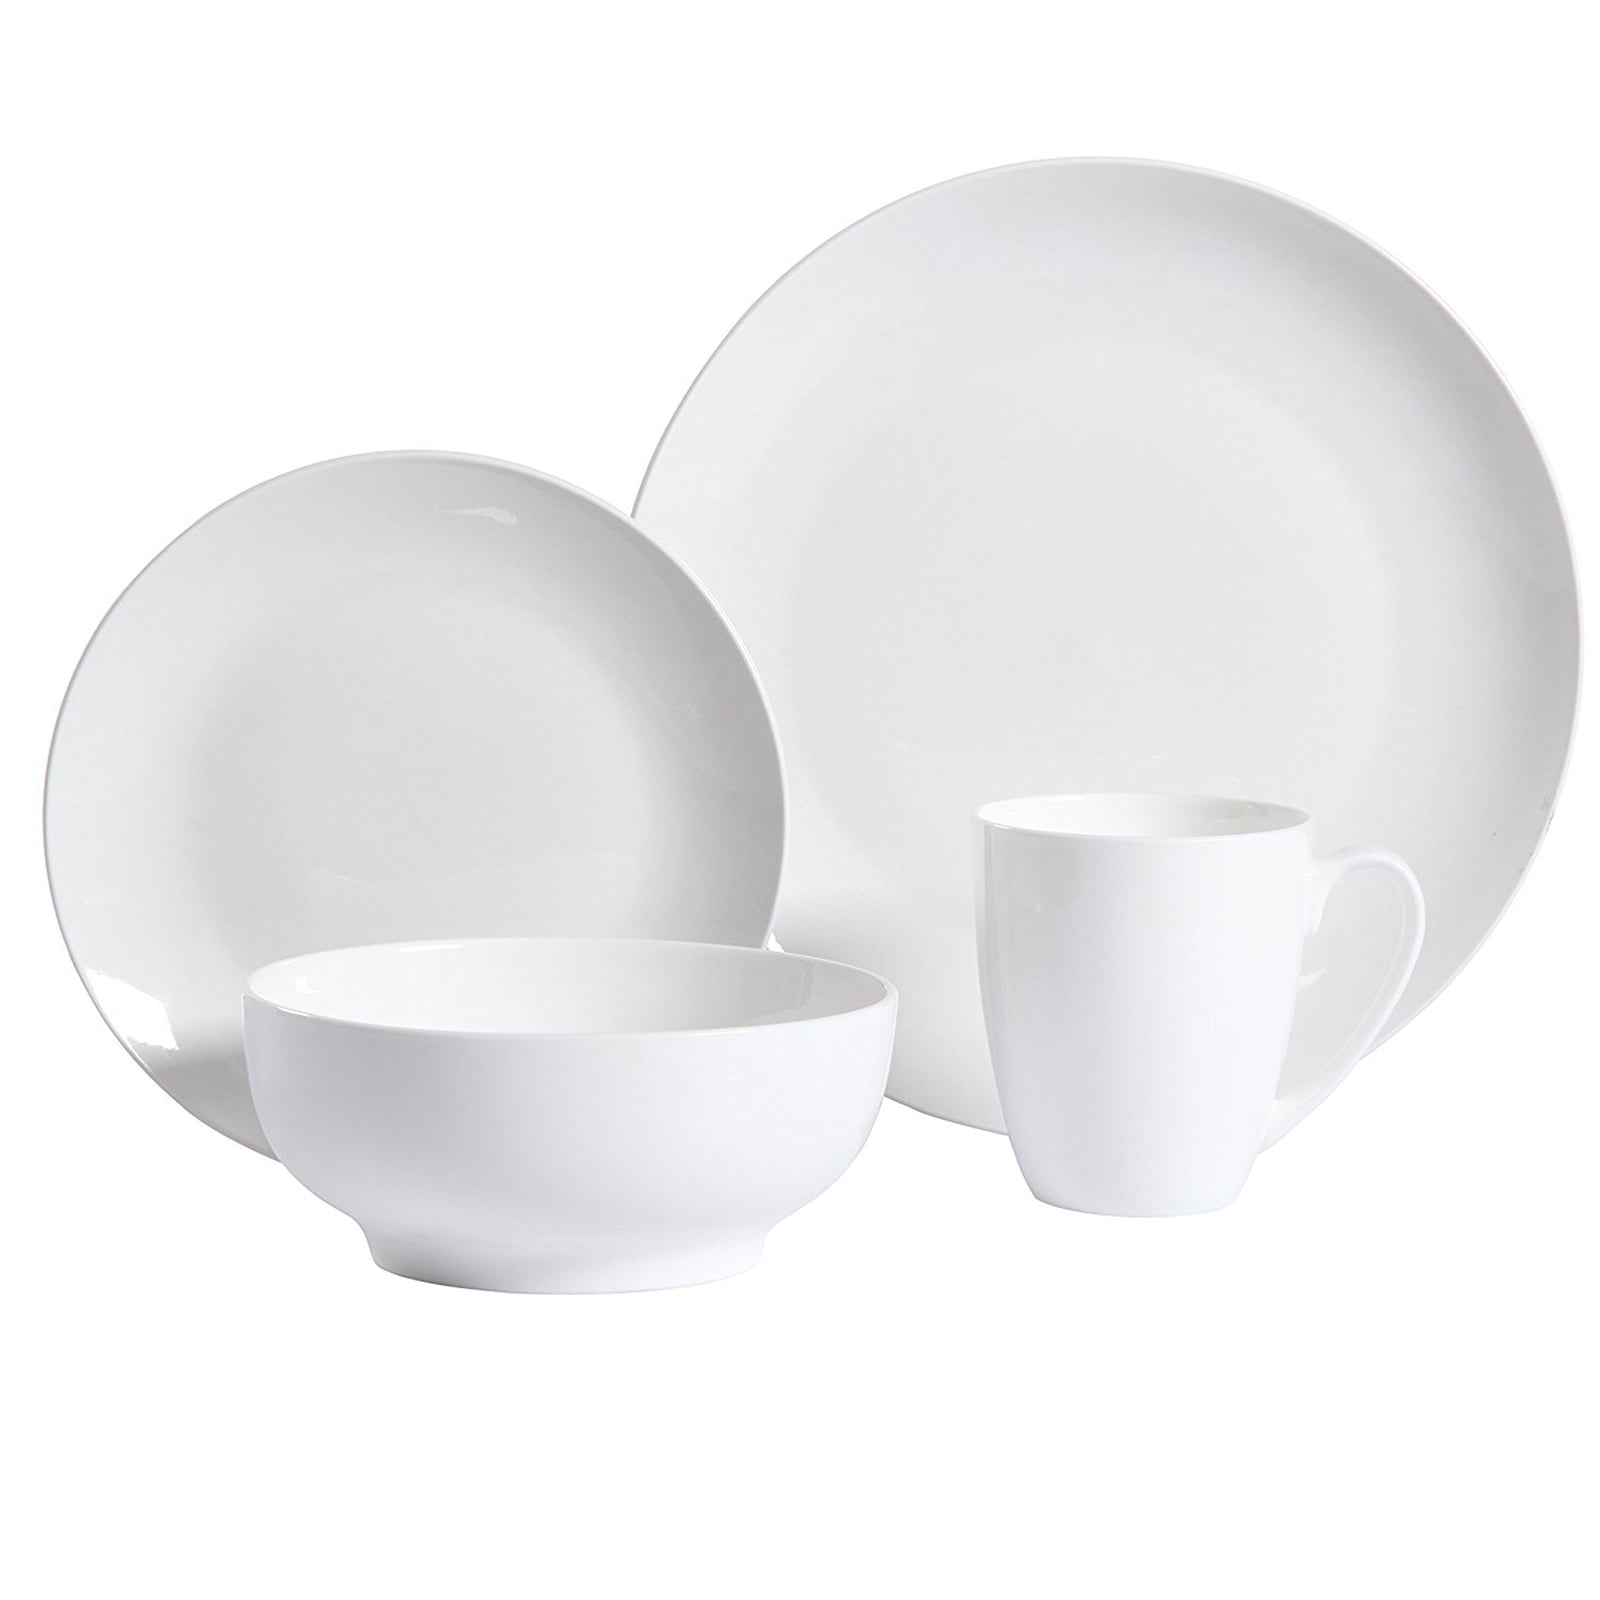 30-Pcs Porcelain Dinnerware Set Square Dinner Plates Dish Service Microwave Safe 